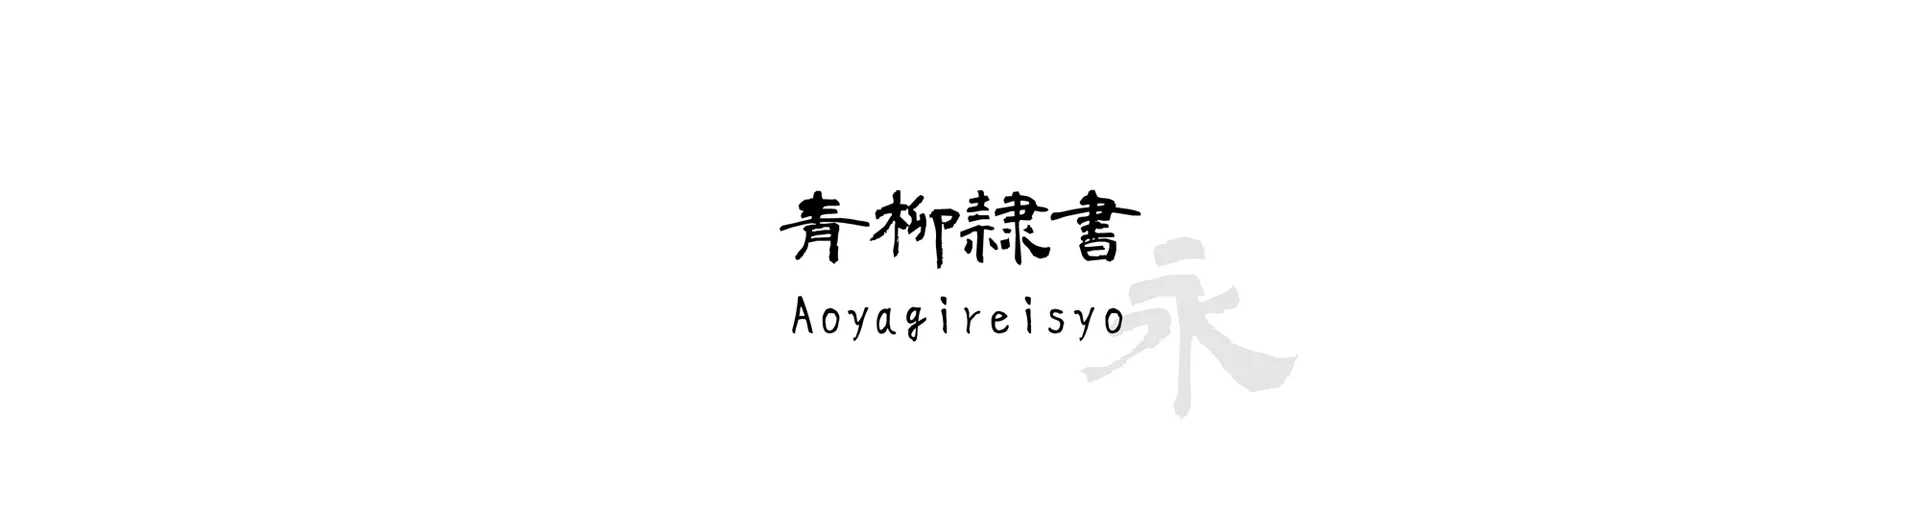 Aoyagireisyo